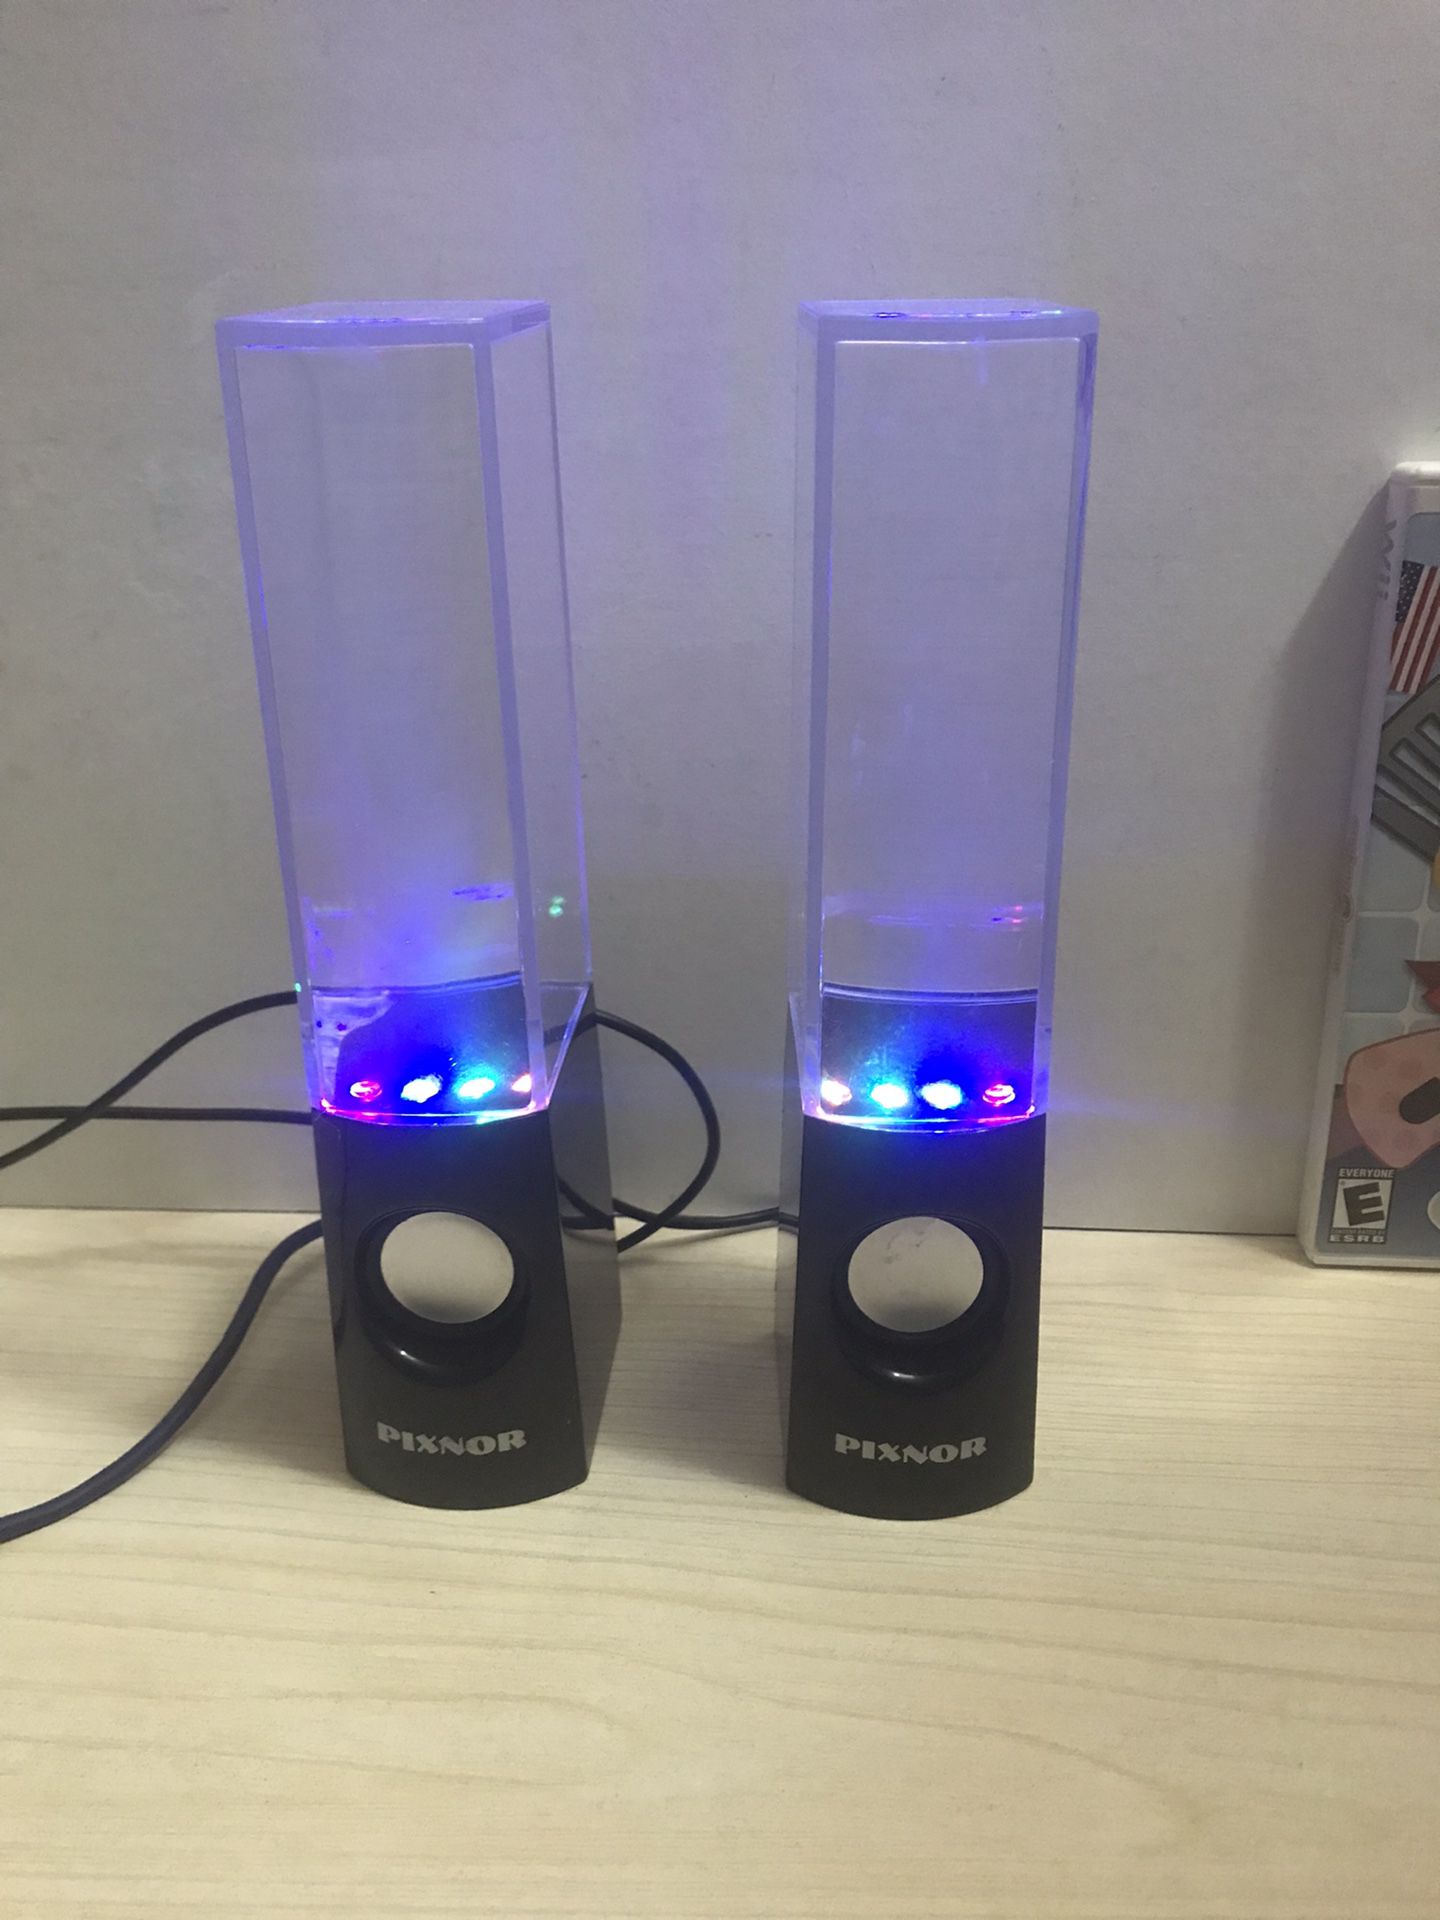 Pixnor Bluetooth Dancing Water Speakers 